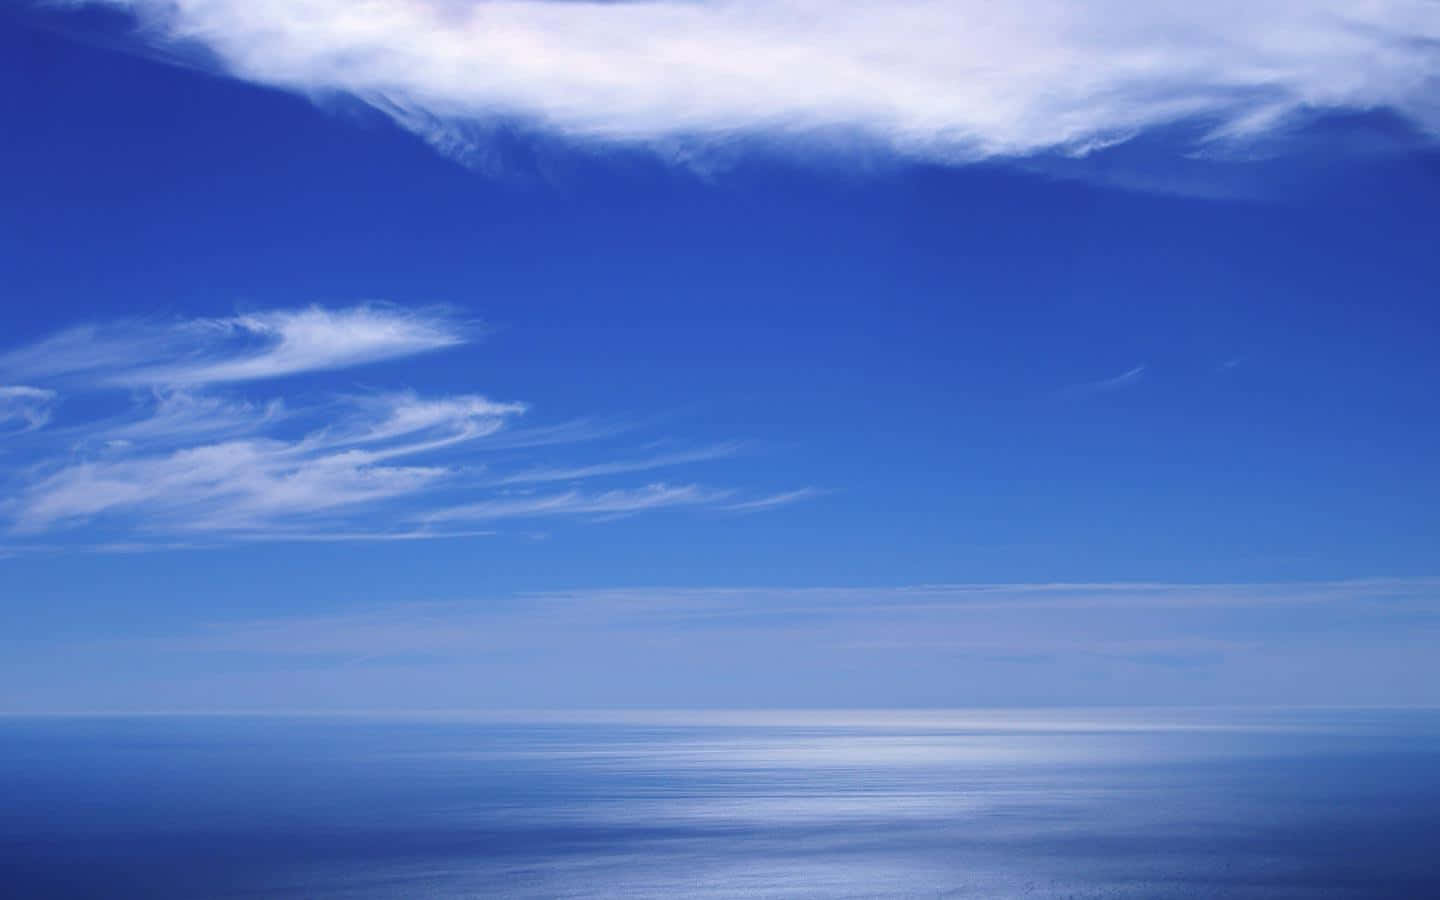 Unending Possibilities of the Ocean Blue